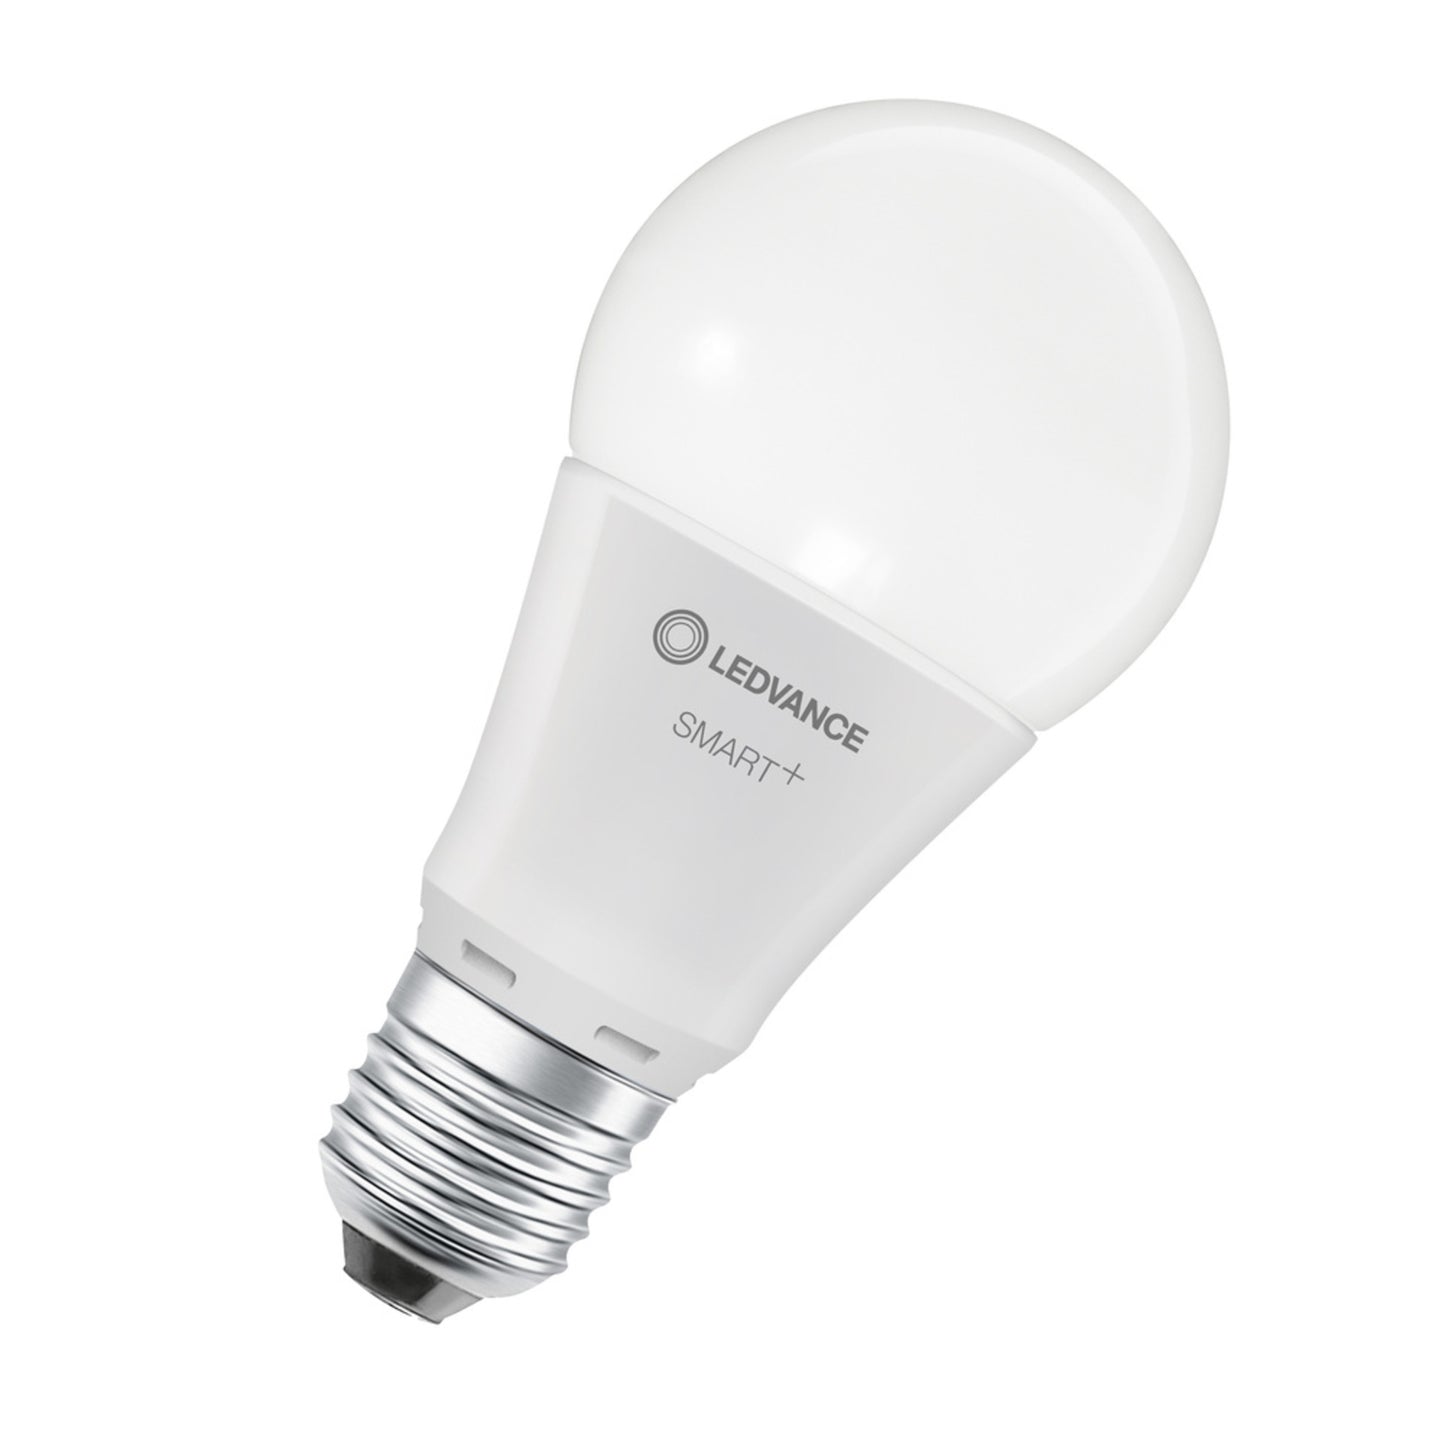 Ledvance SMART+ WiFi 9-W-LED-Lampe A60, E27, 806 lm, Tunable White, dimmbar, Alexa, App